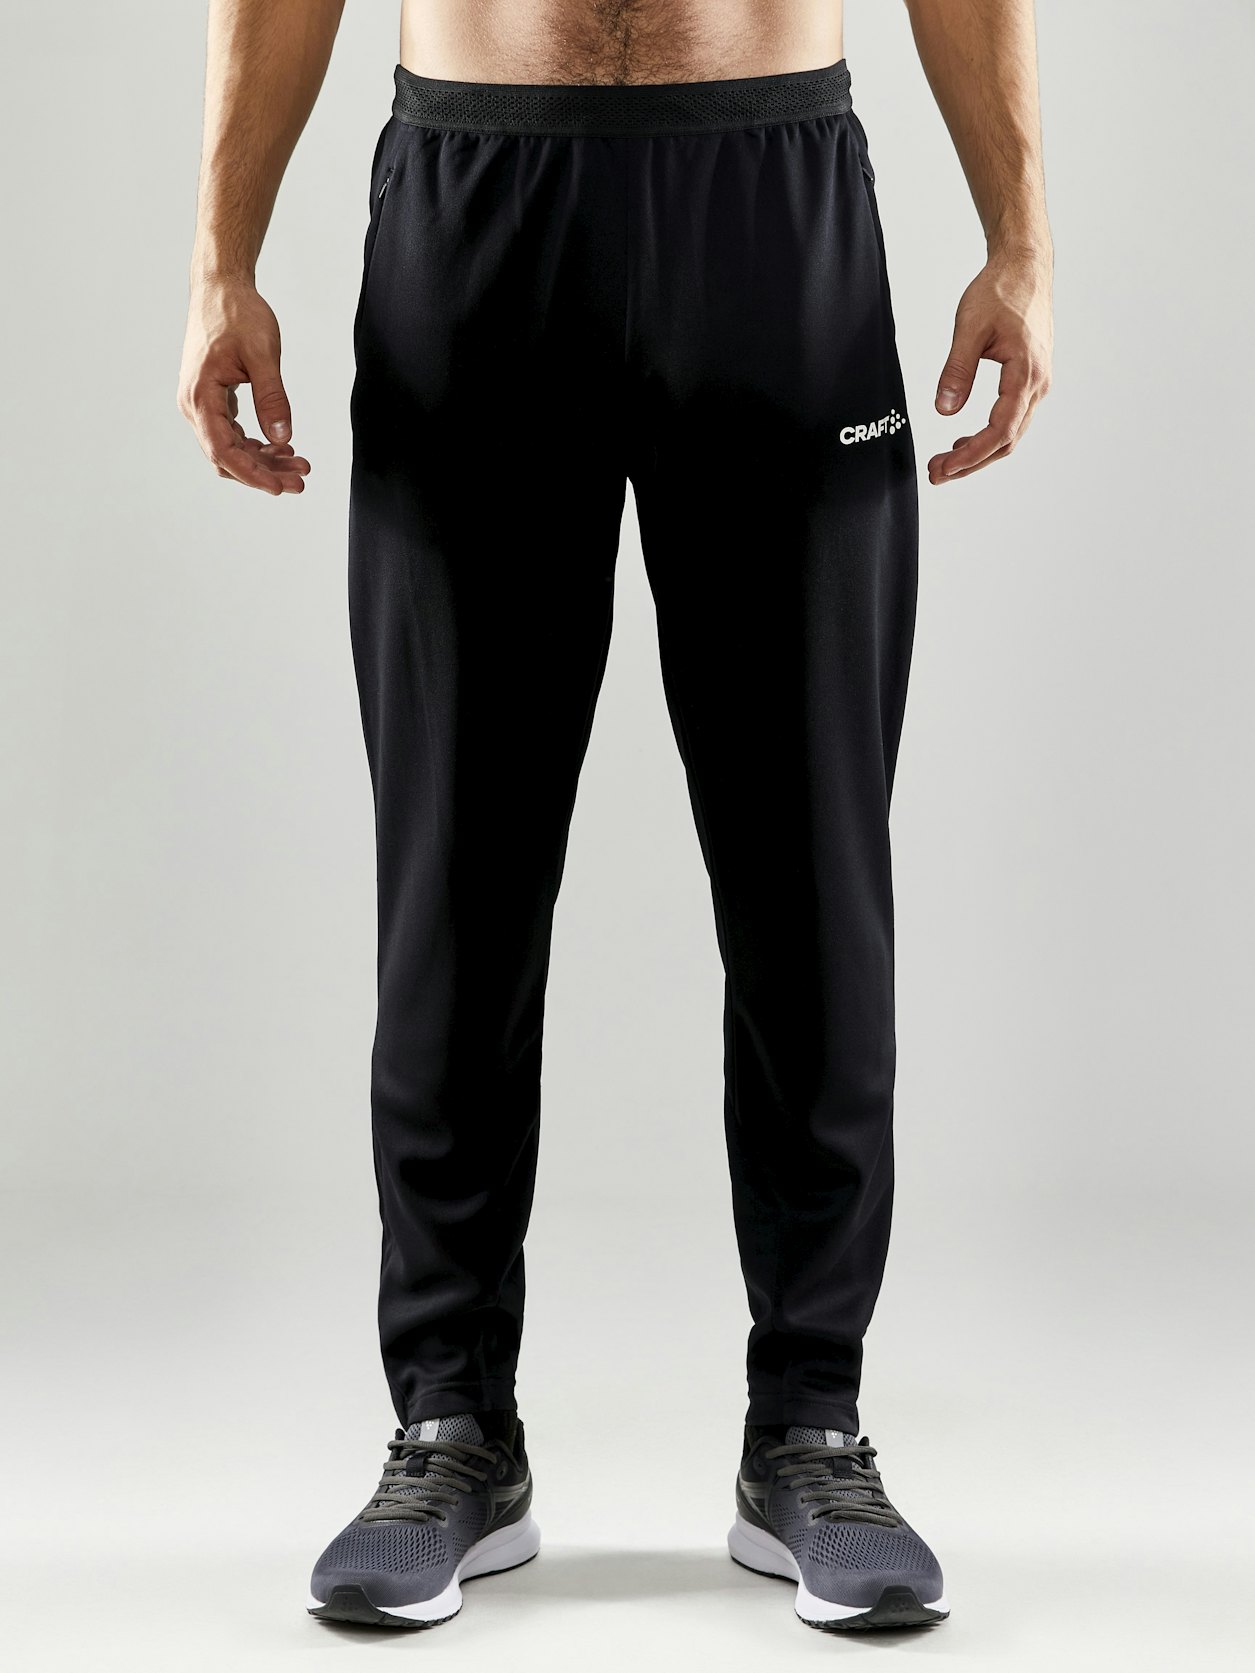 gespannen sensatie Hoofd Evolve Pants M - Black | Craft Sportswear